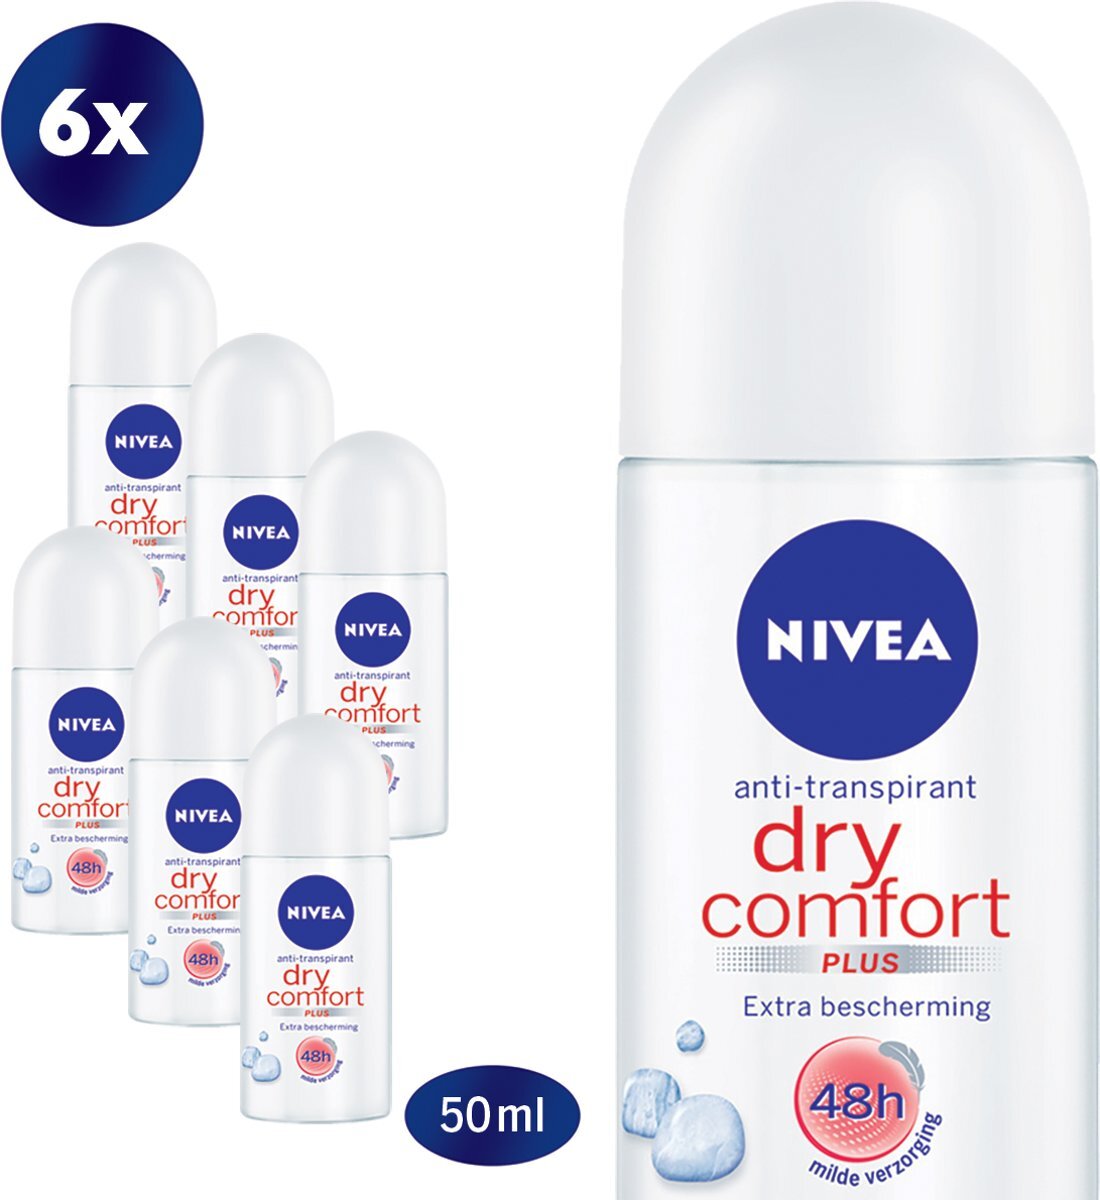 Nivea Dry Comfort Deodorant Roller